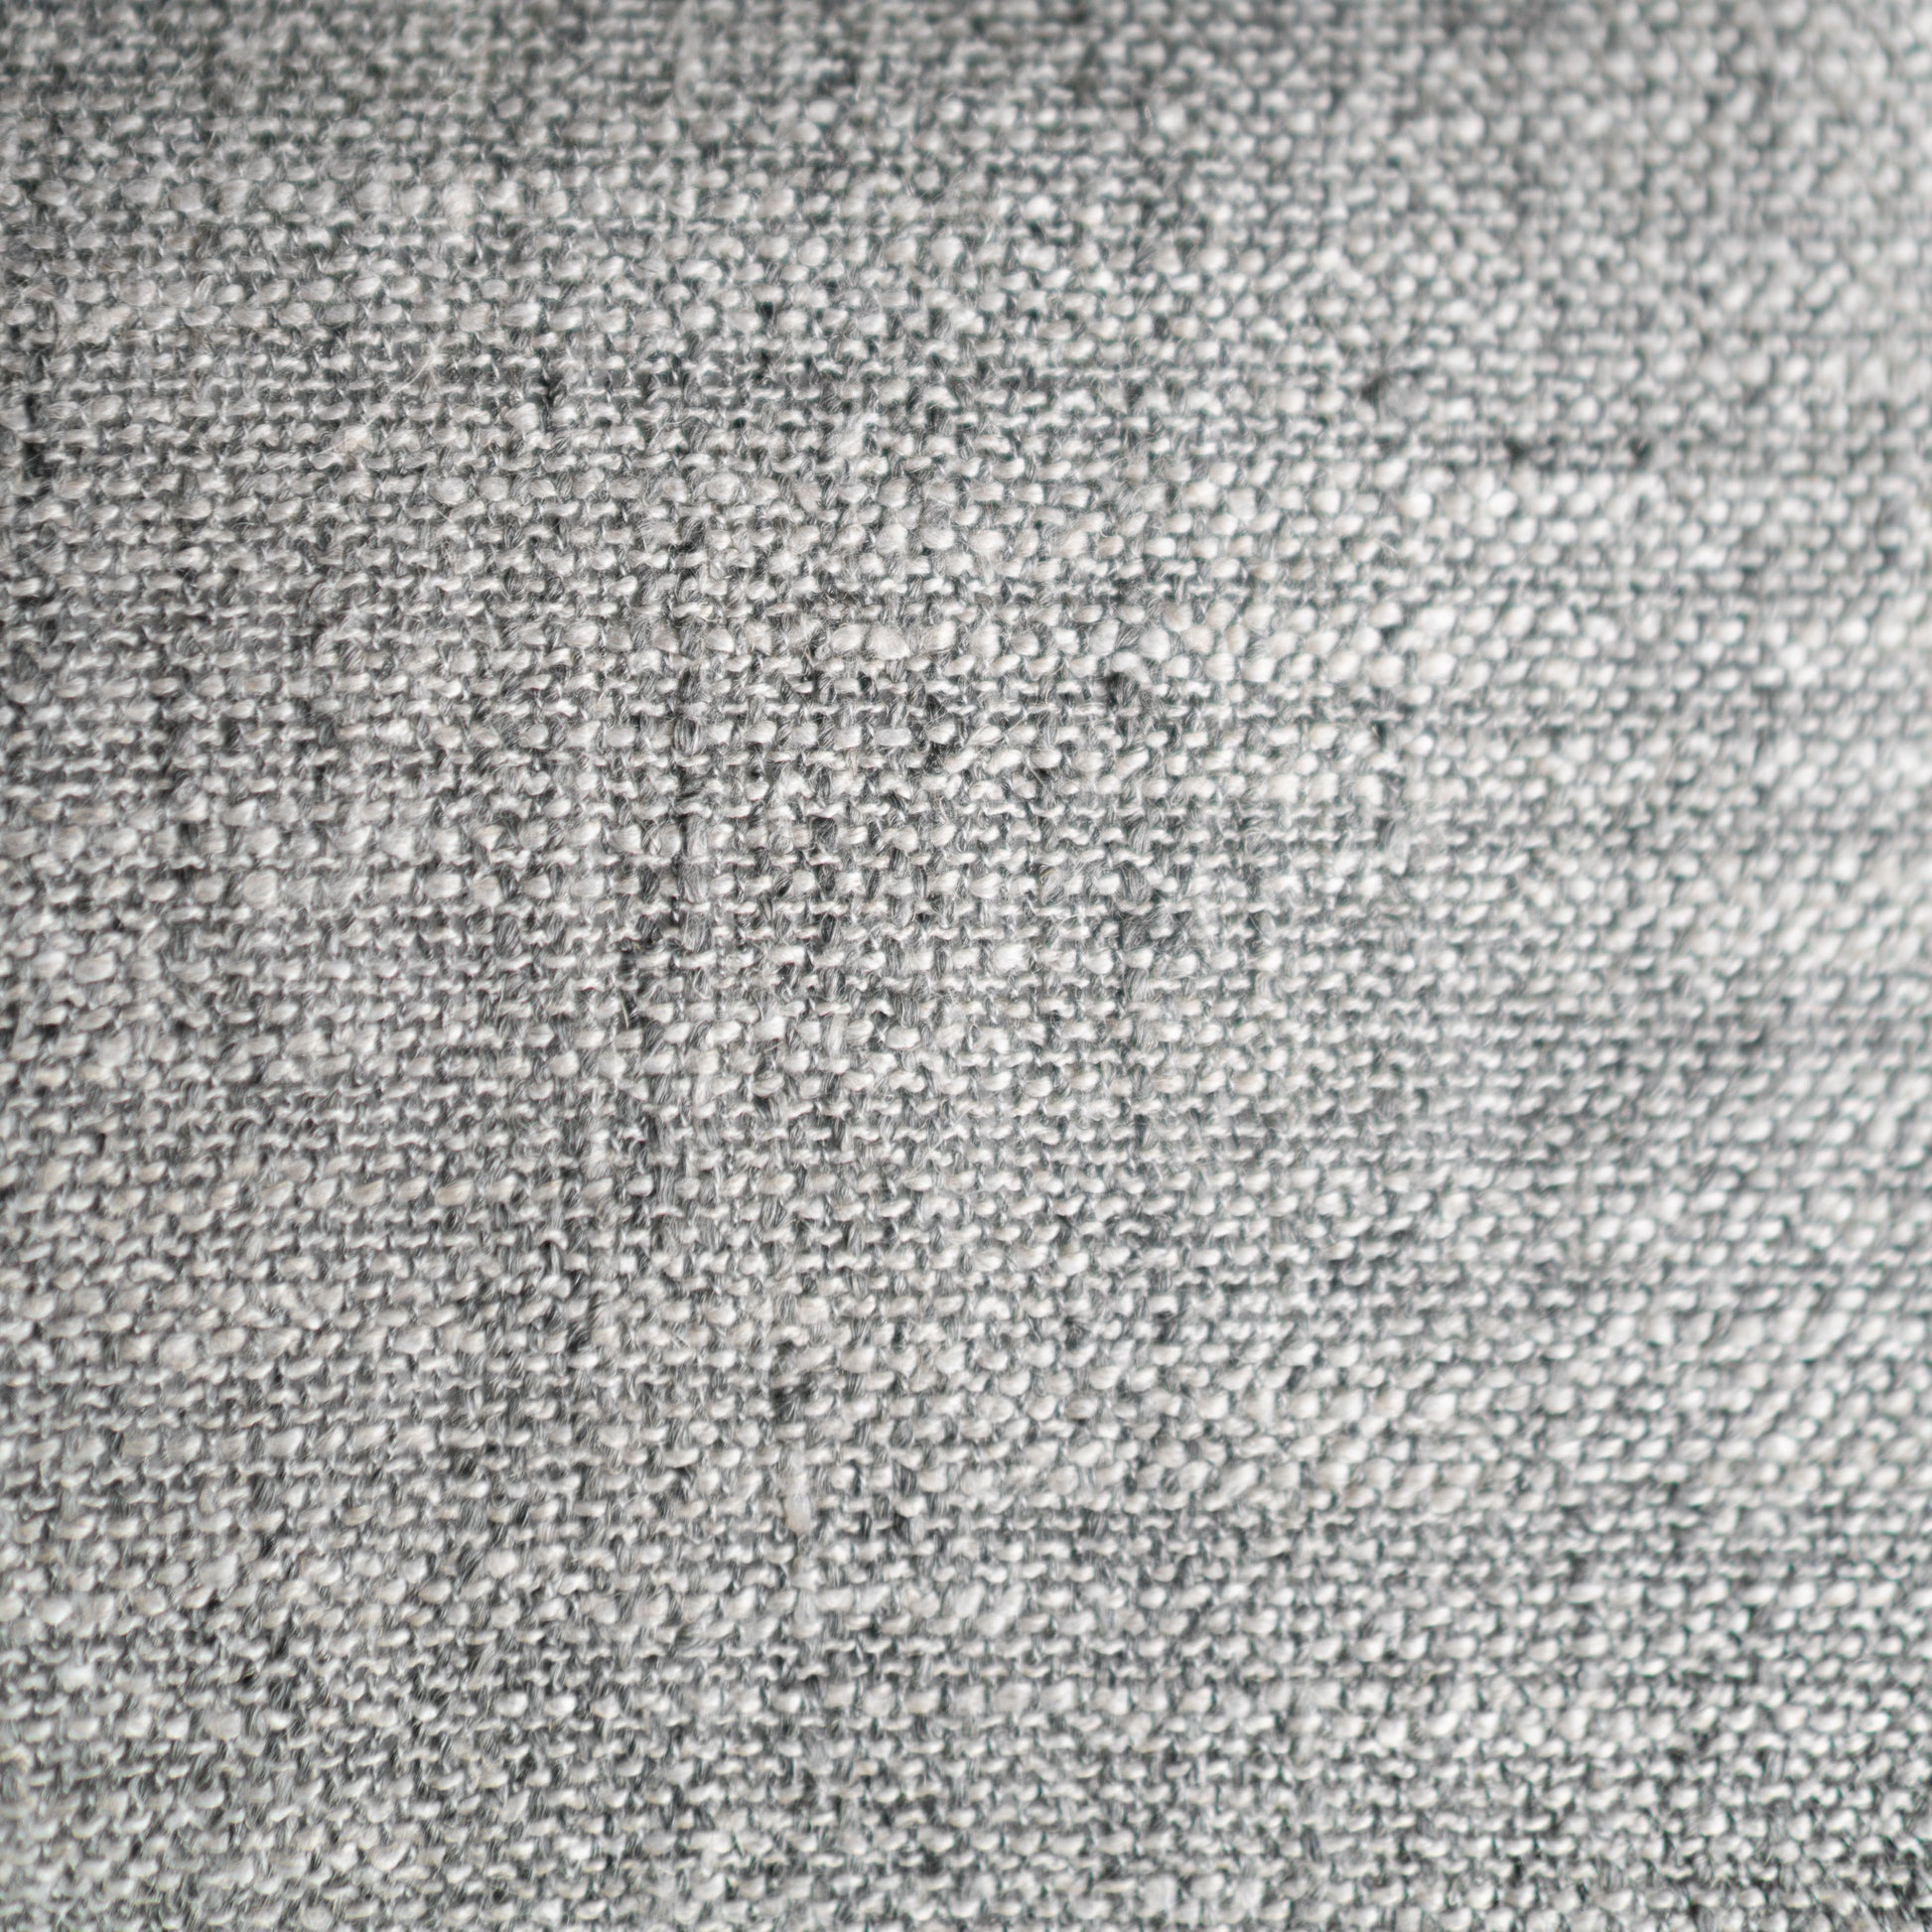 Sierra chair x brooke wagner - fabric sample